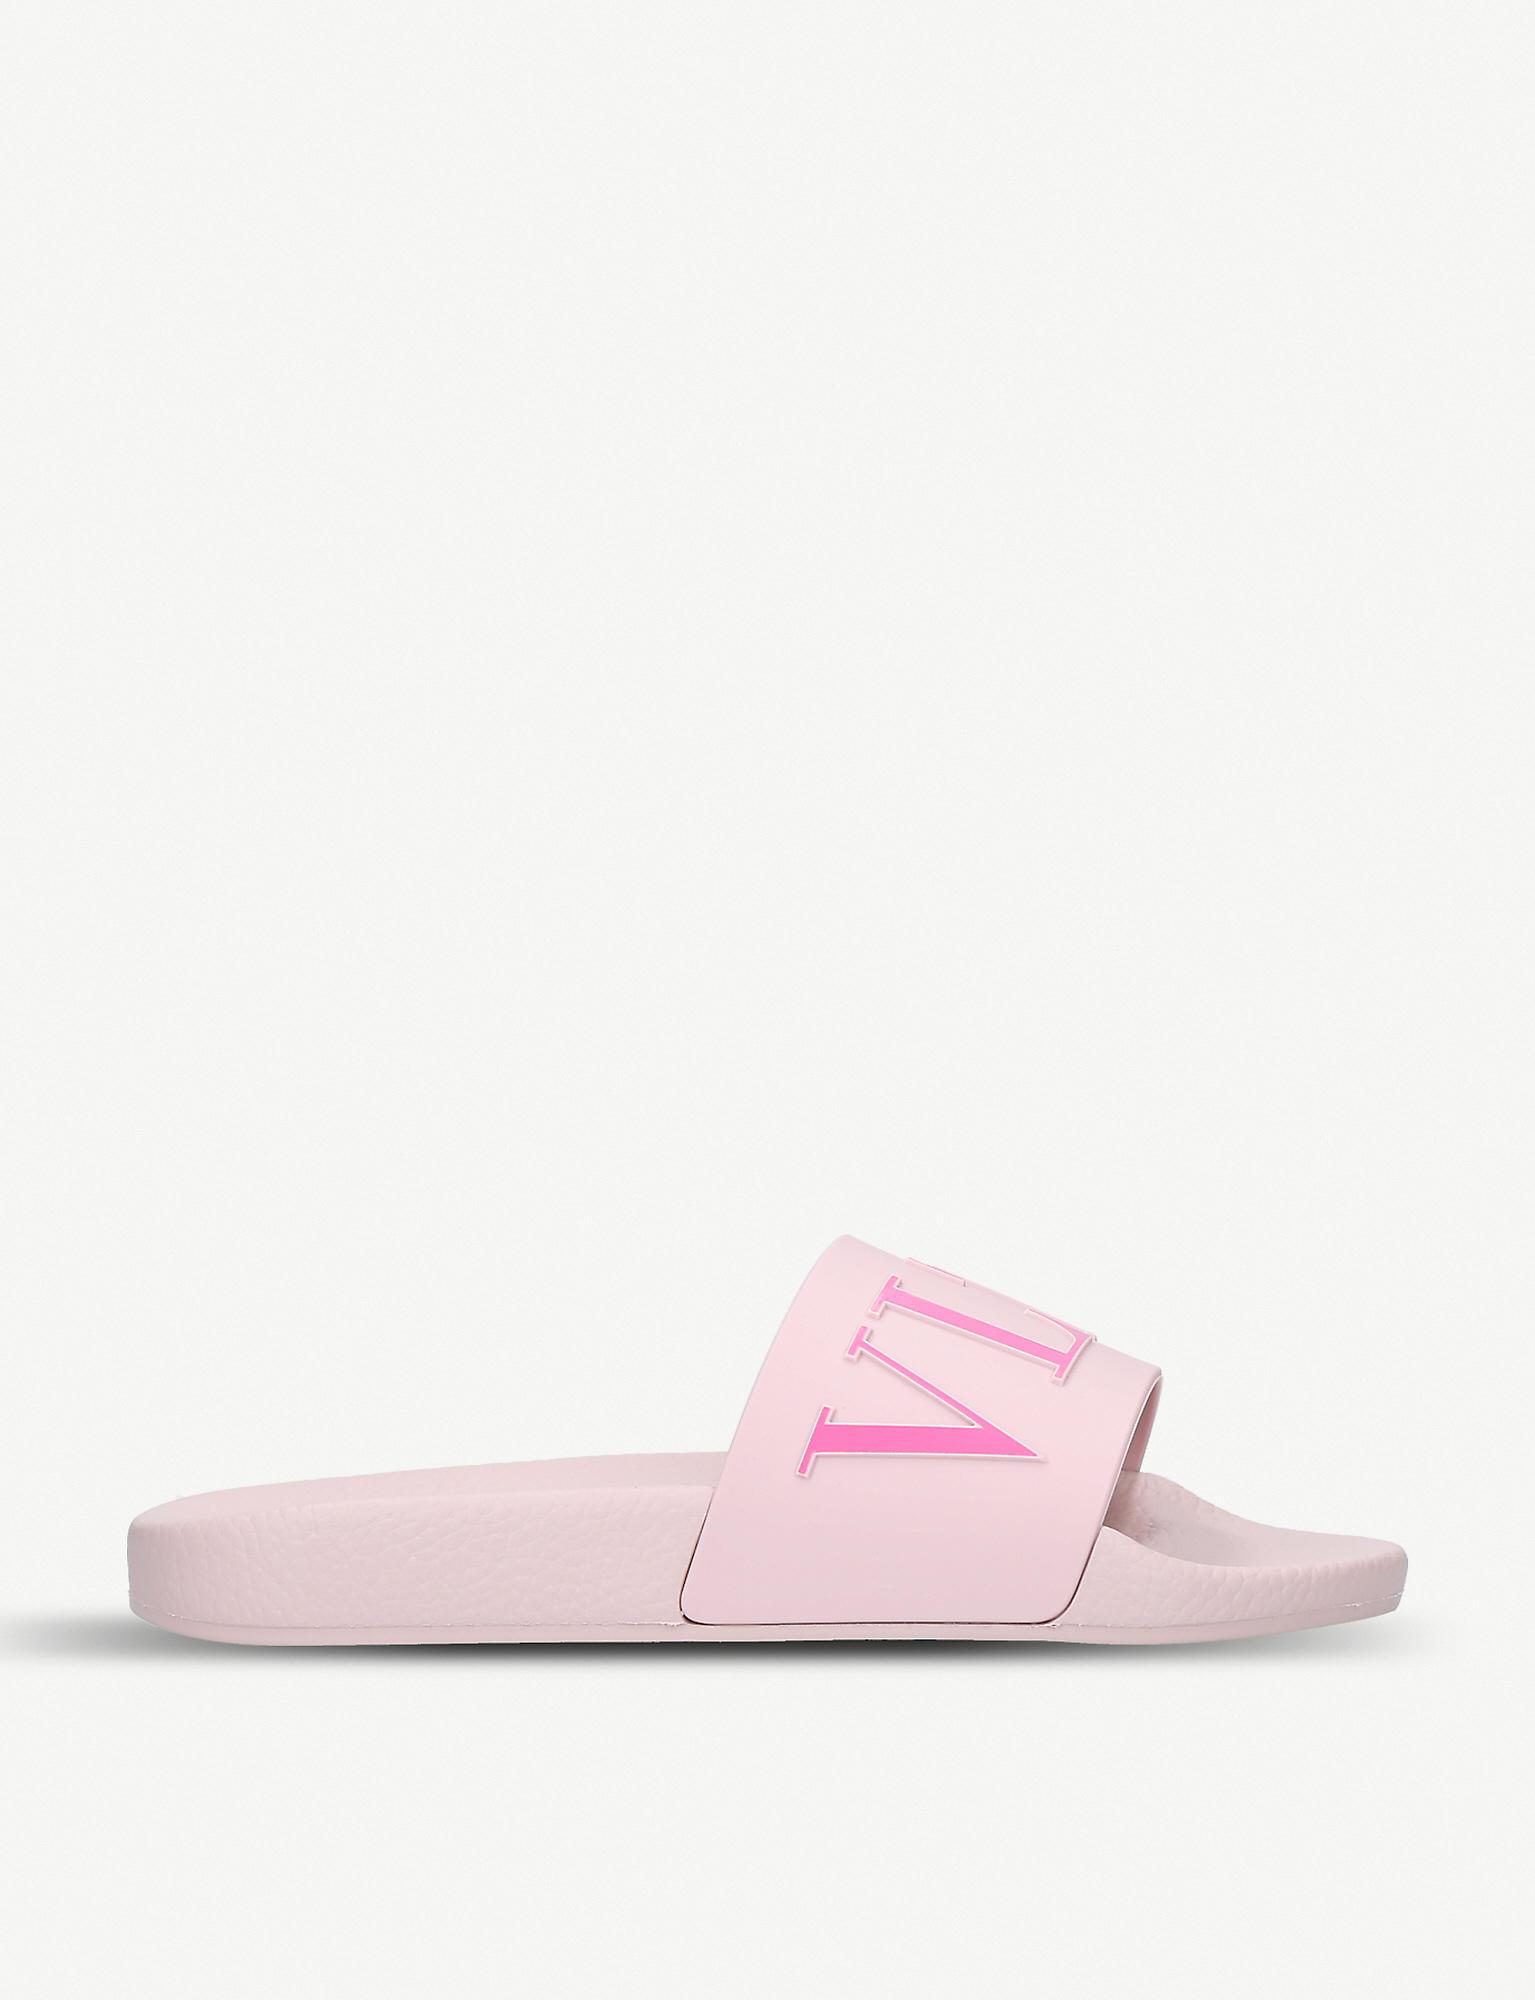 Valentino Vltn Rubber Sliders in Pale Pink (Pink) - Lyst